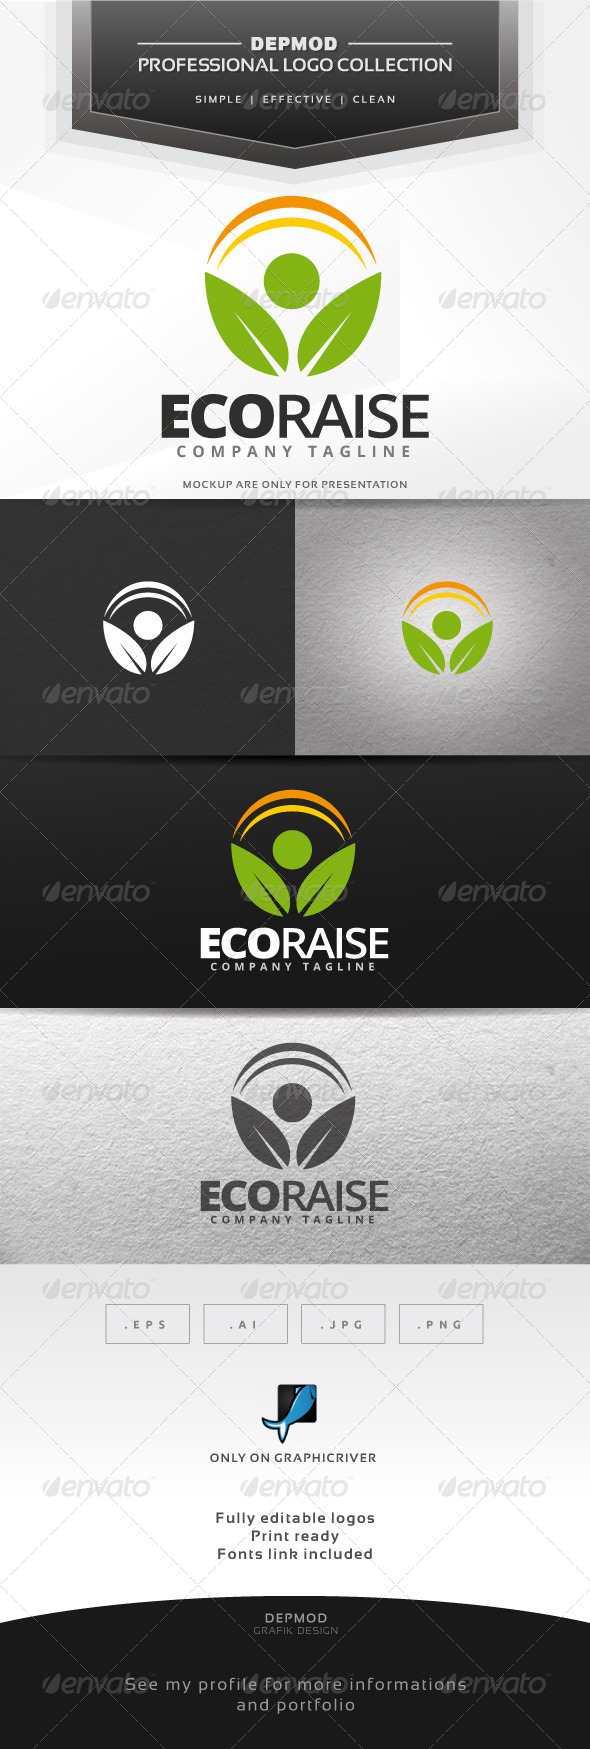 Eco Raise Logo